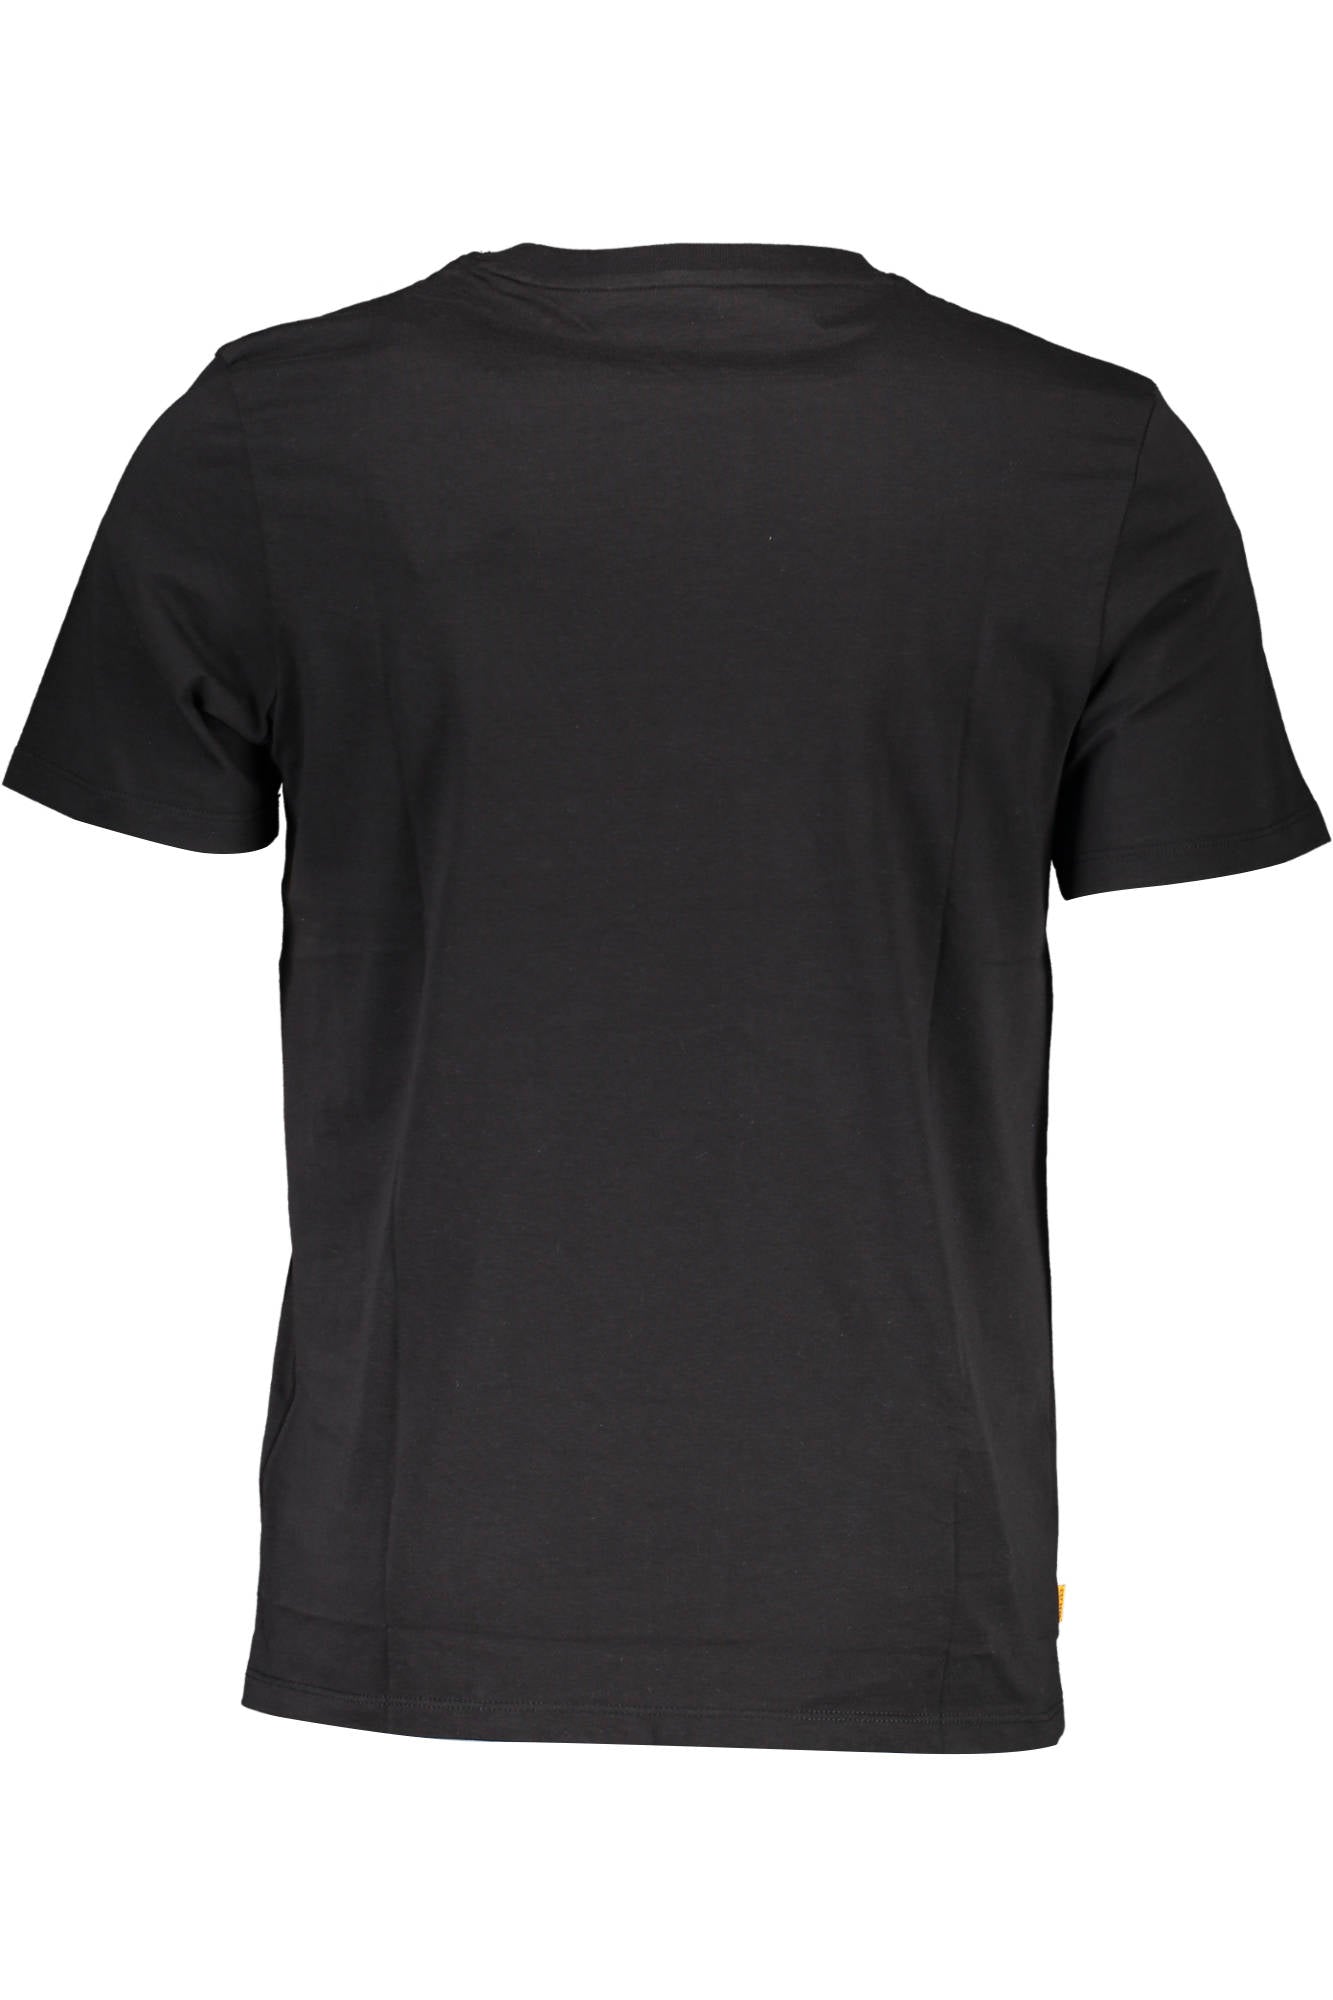 Timberland Black Cotton T-Shirt - Fizigo